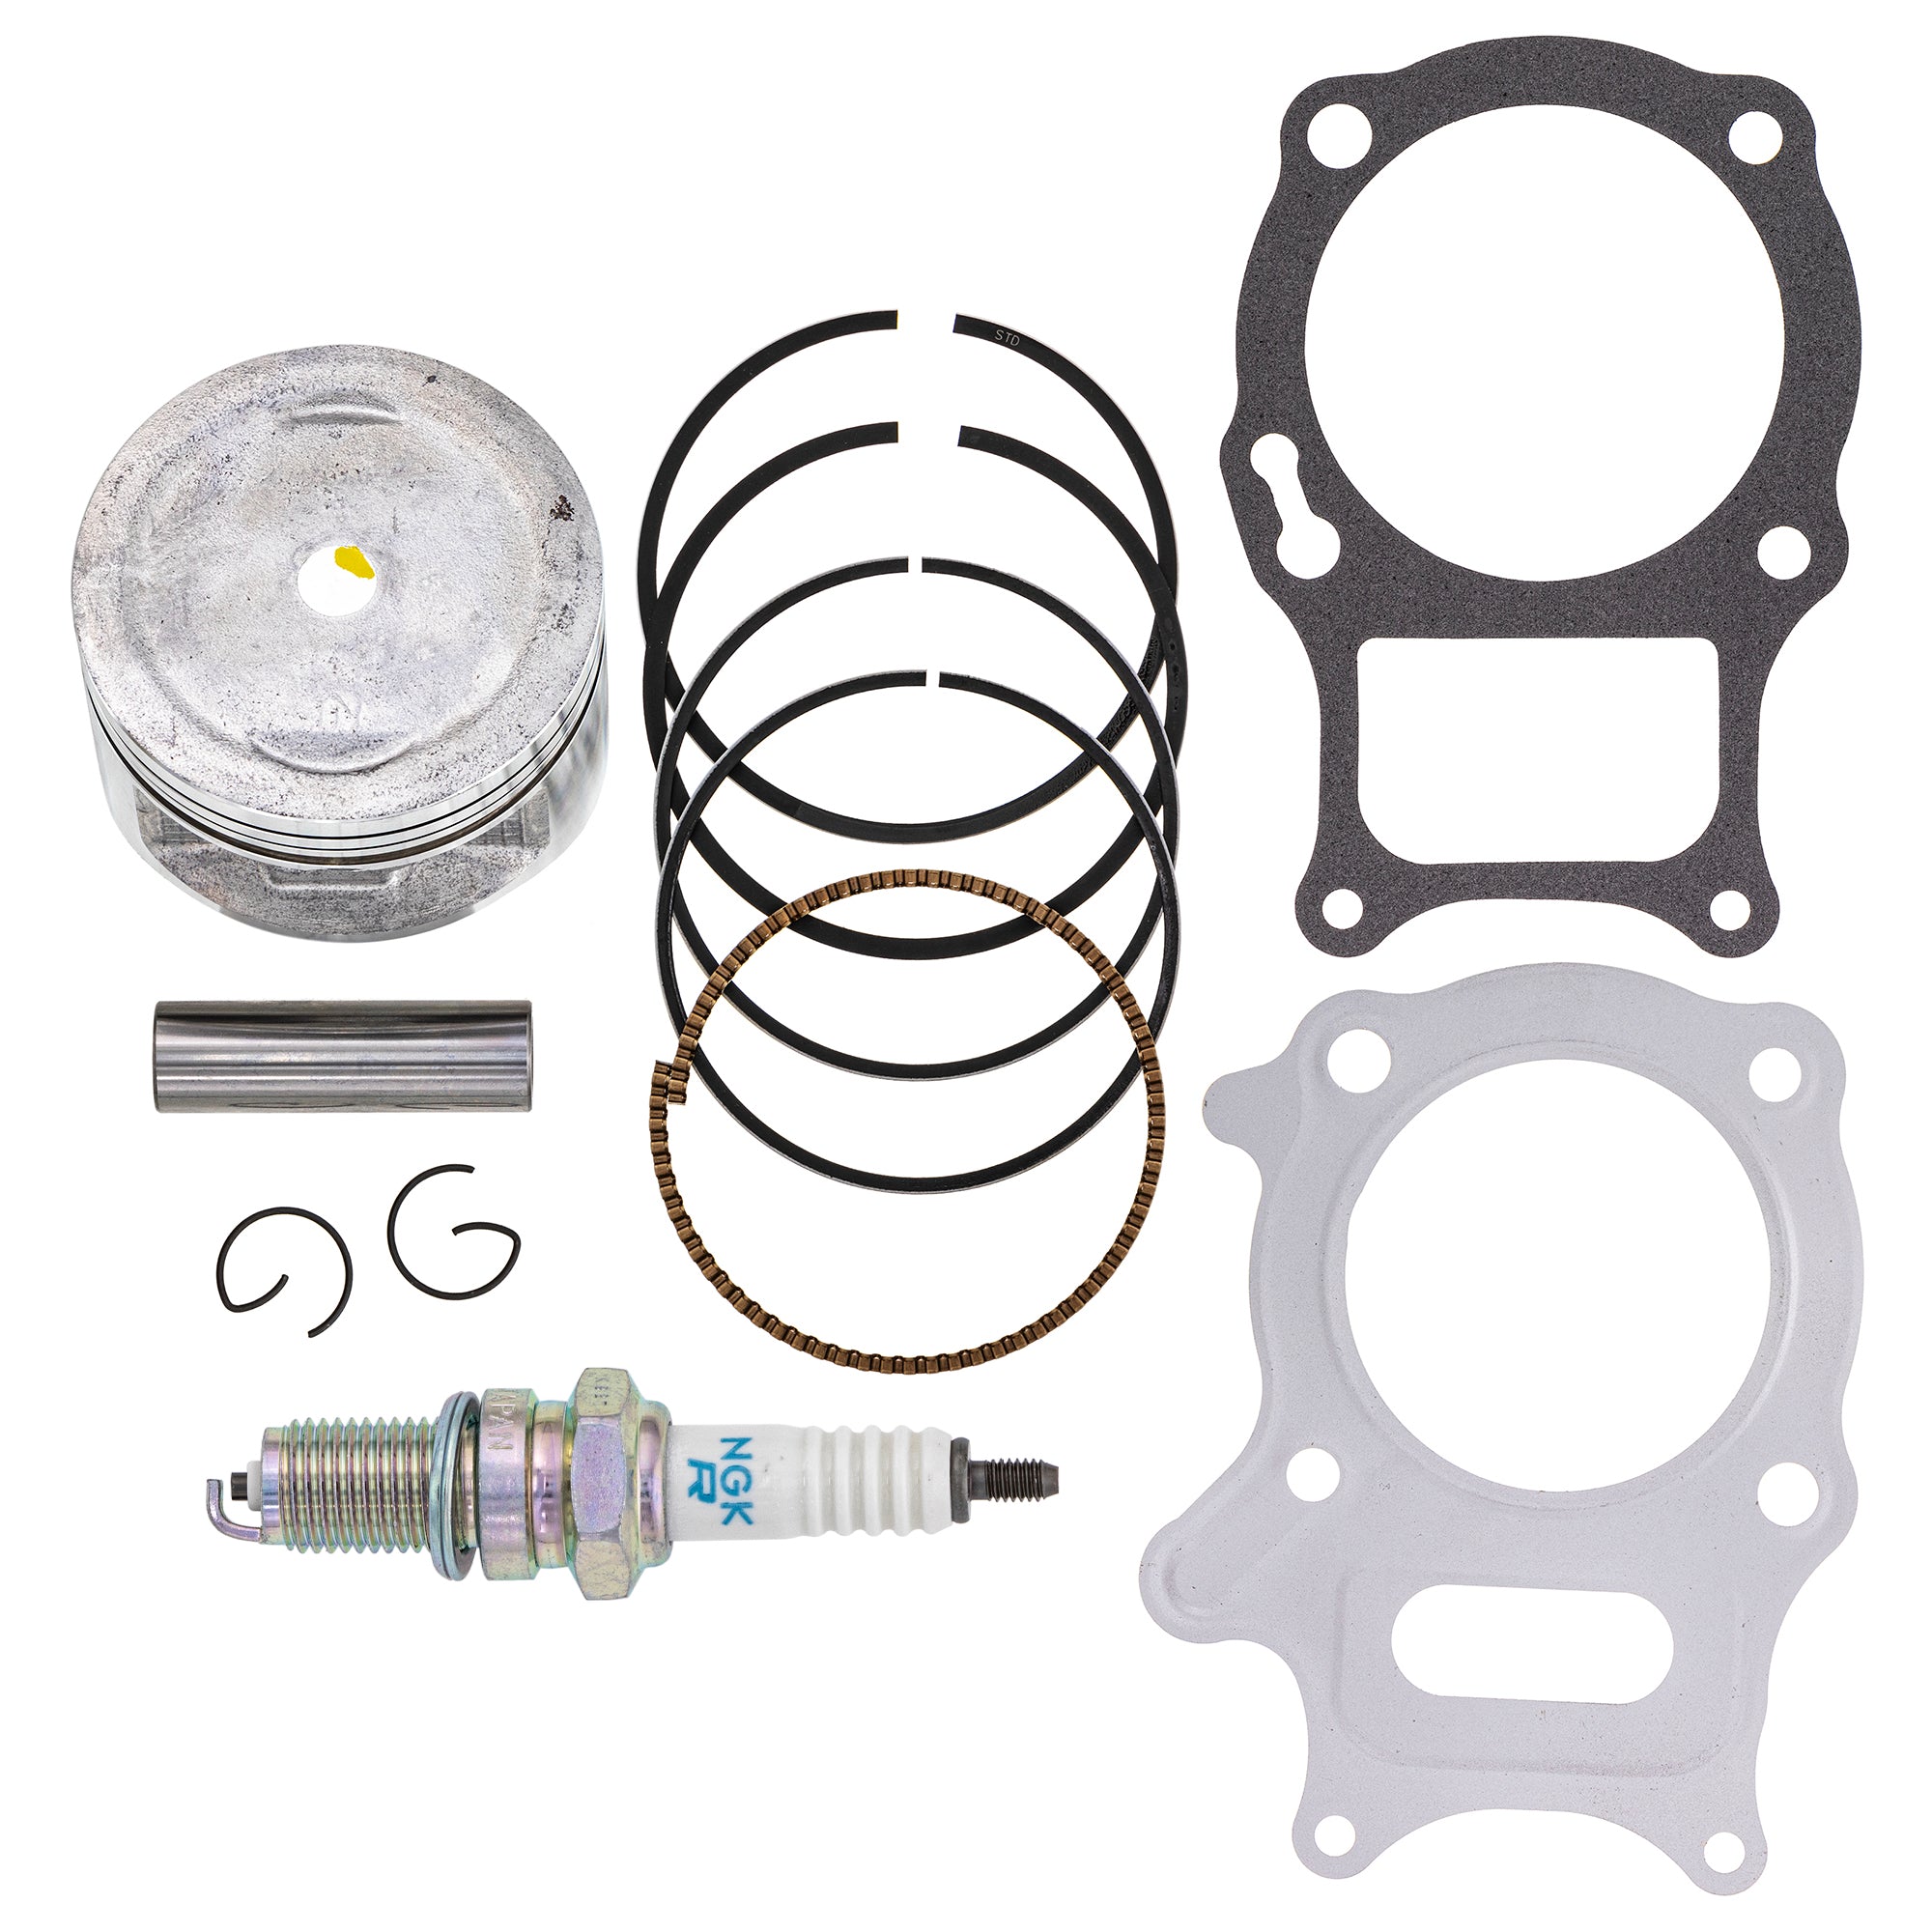 Piston Gasket Kit for zOTHER Honda TRX250 SporTrax Recon 94601-15000 90551-883-000 NICHE MK1003423